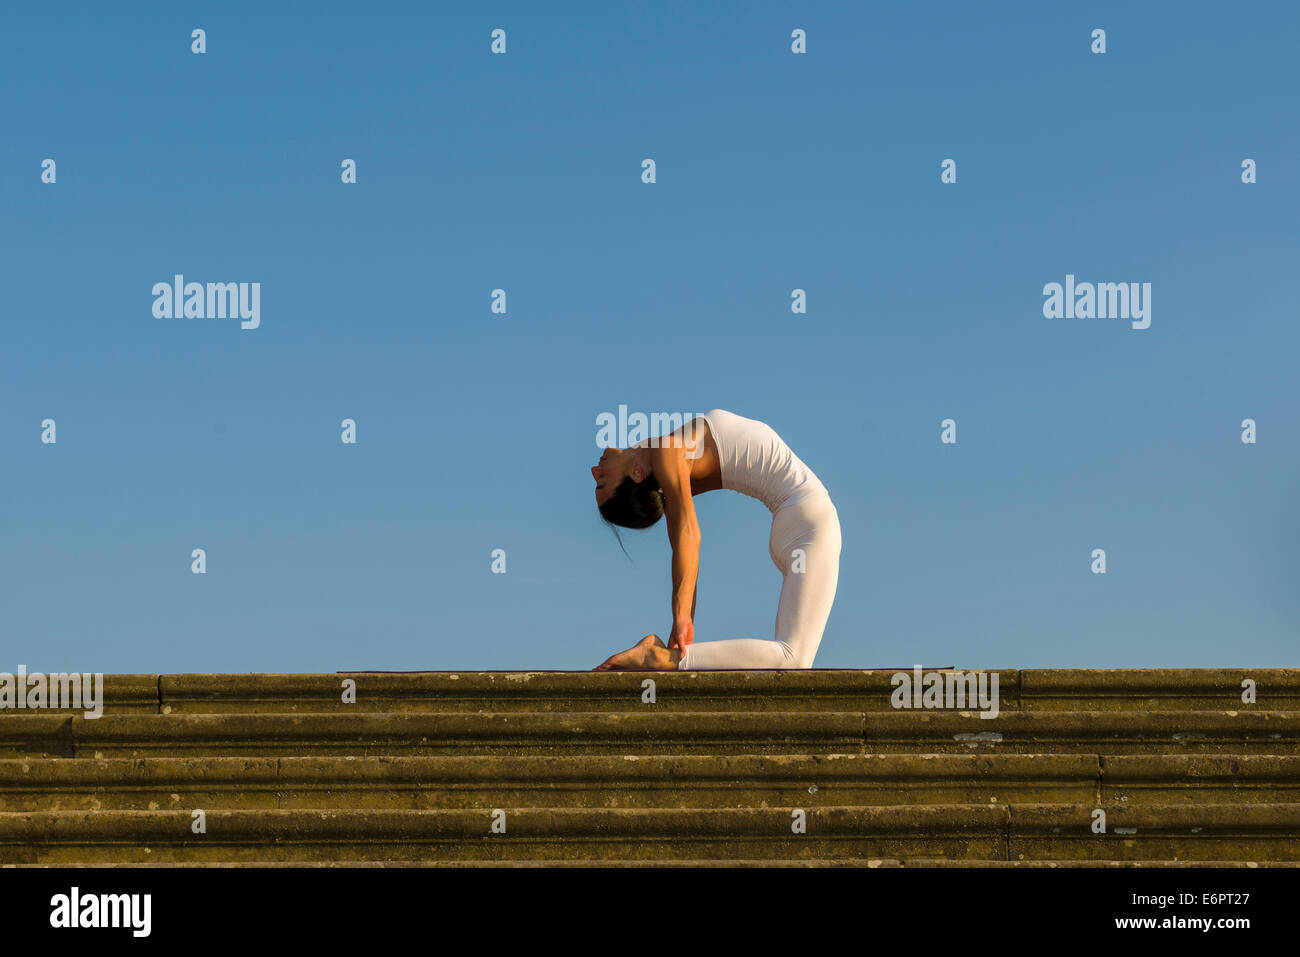 Junge Frau Hatha Yoga im Freien praktizieren, zeigt die Pose Ushtrasana, Kamel-pose Stockfoto